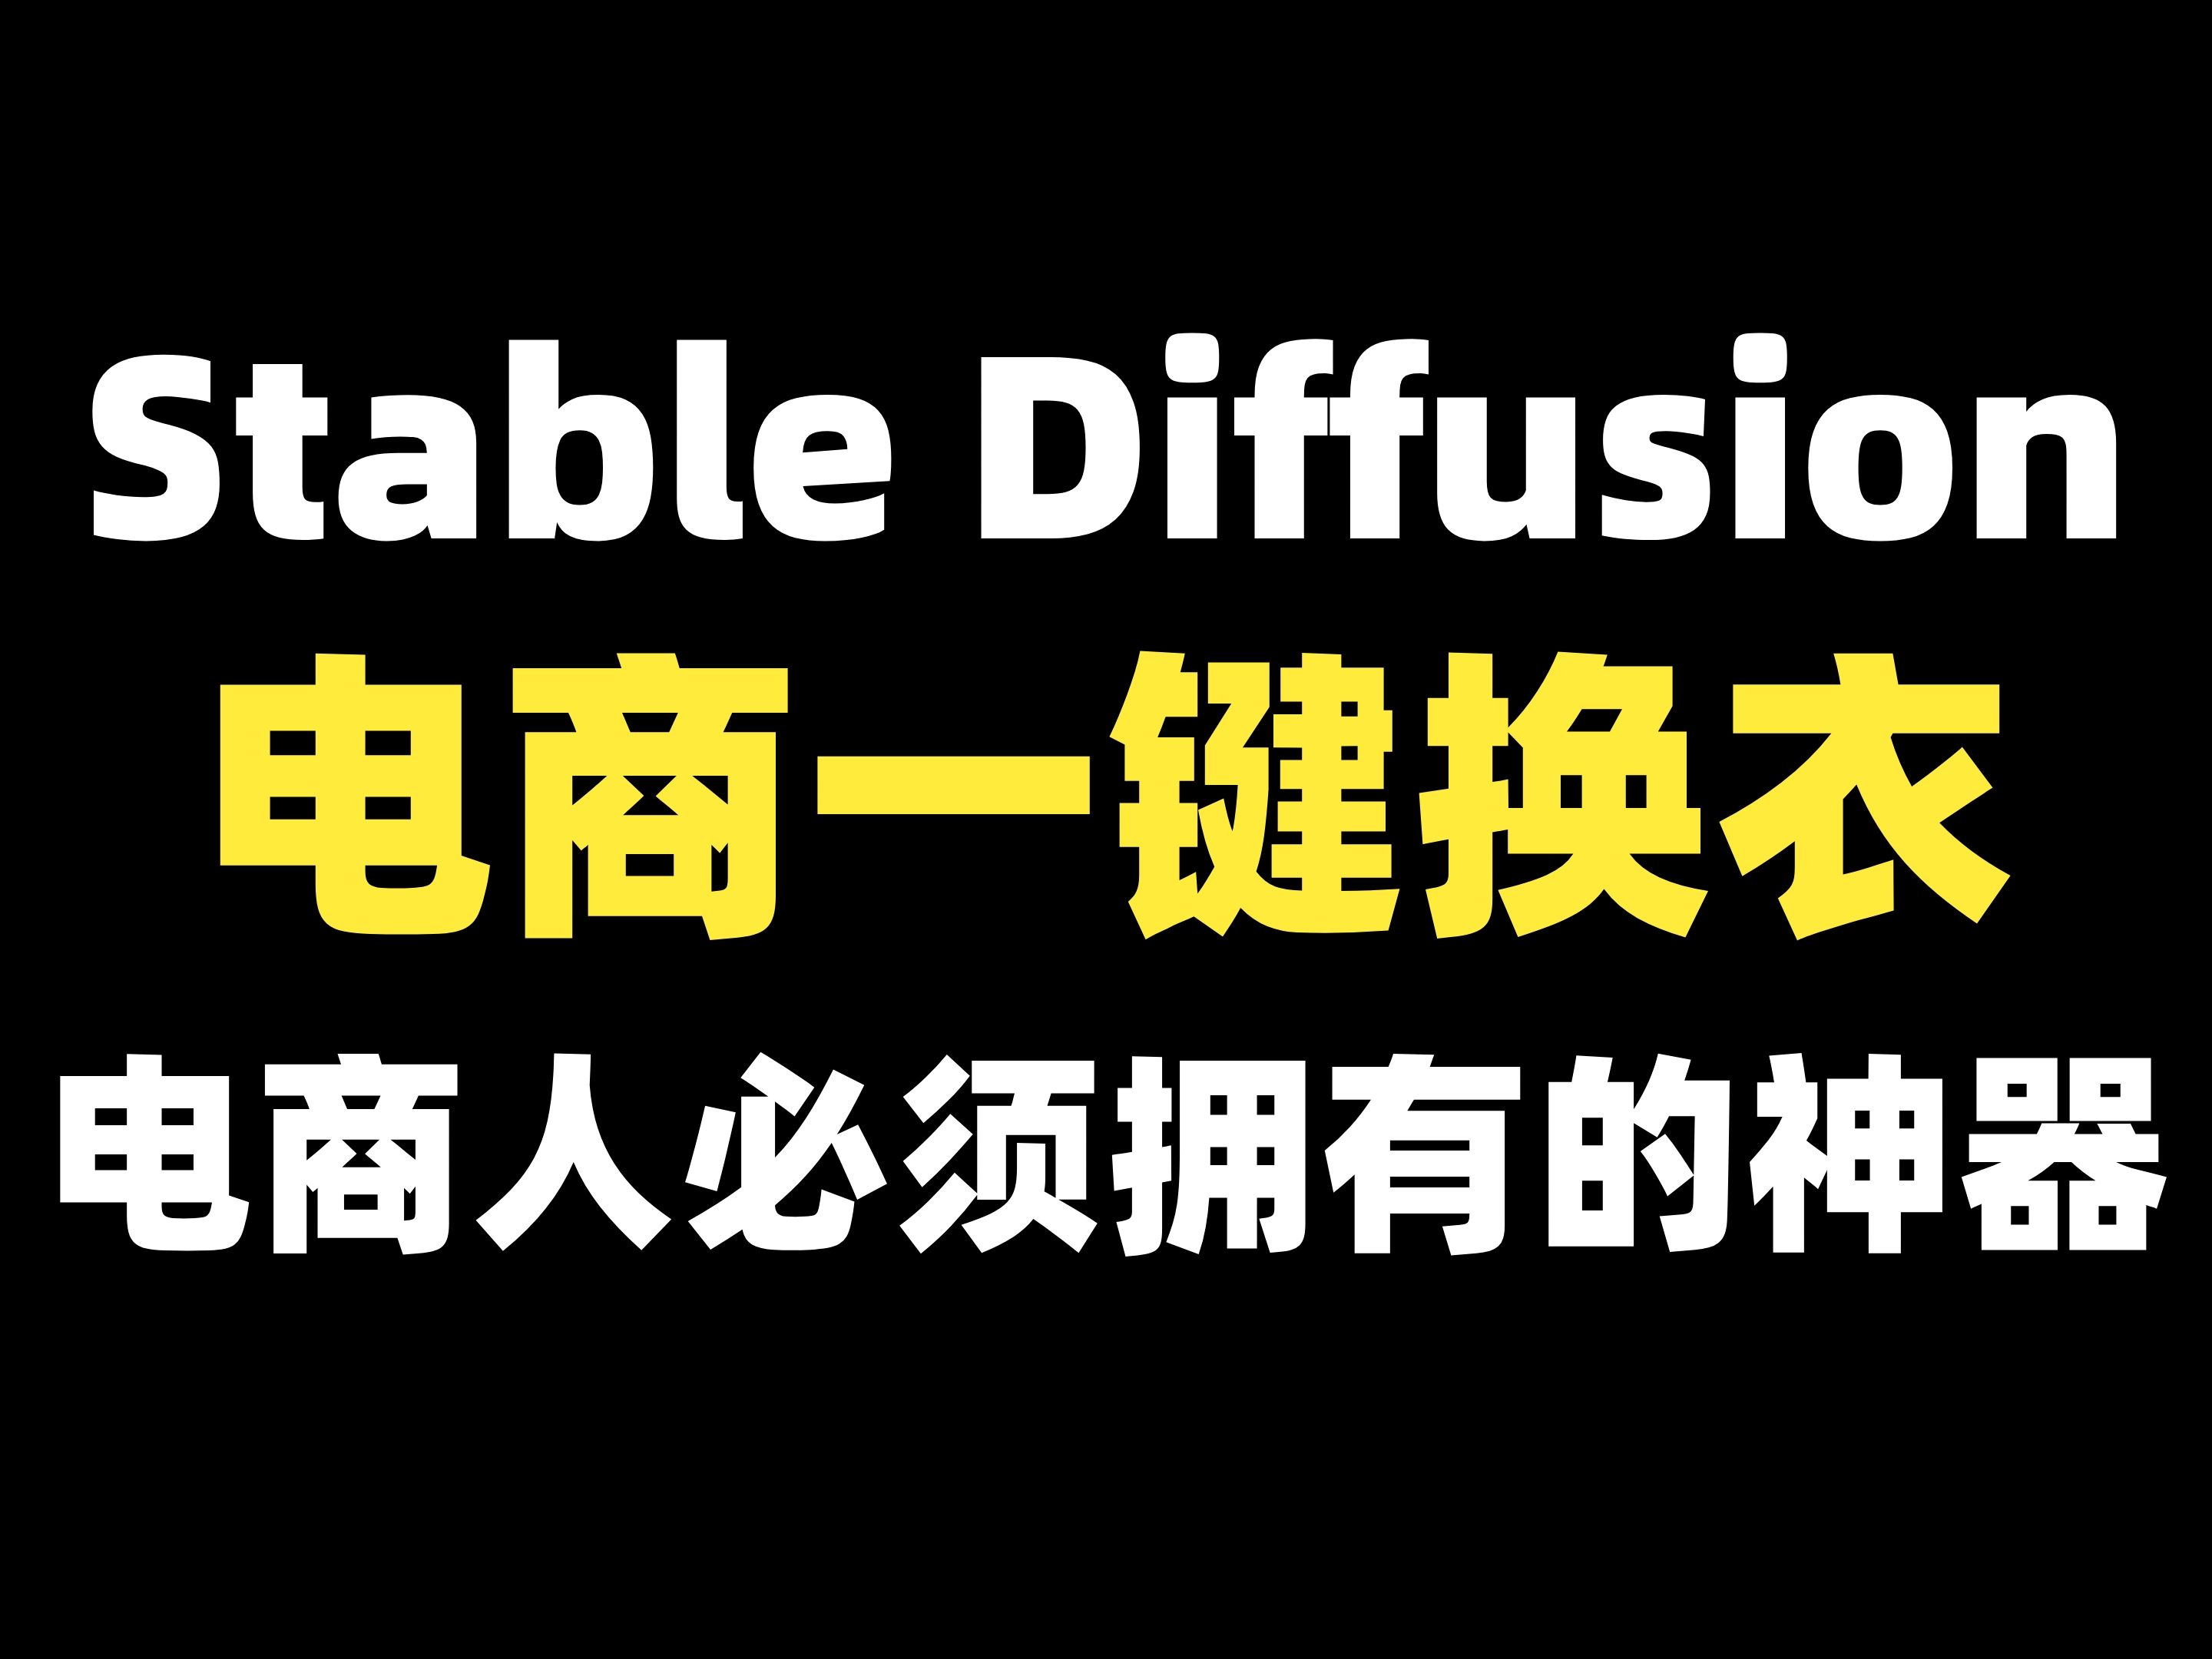 Stable Diffusion一个插件轻松实现AI一键换装，想怎么换就怎么换！电商人的福音！